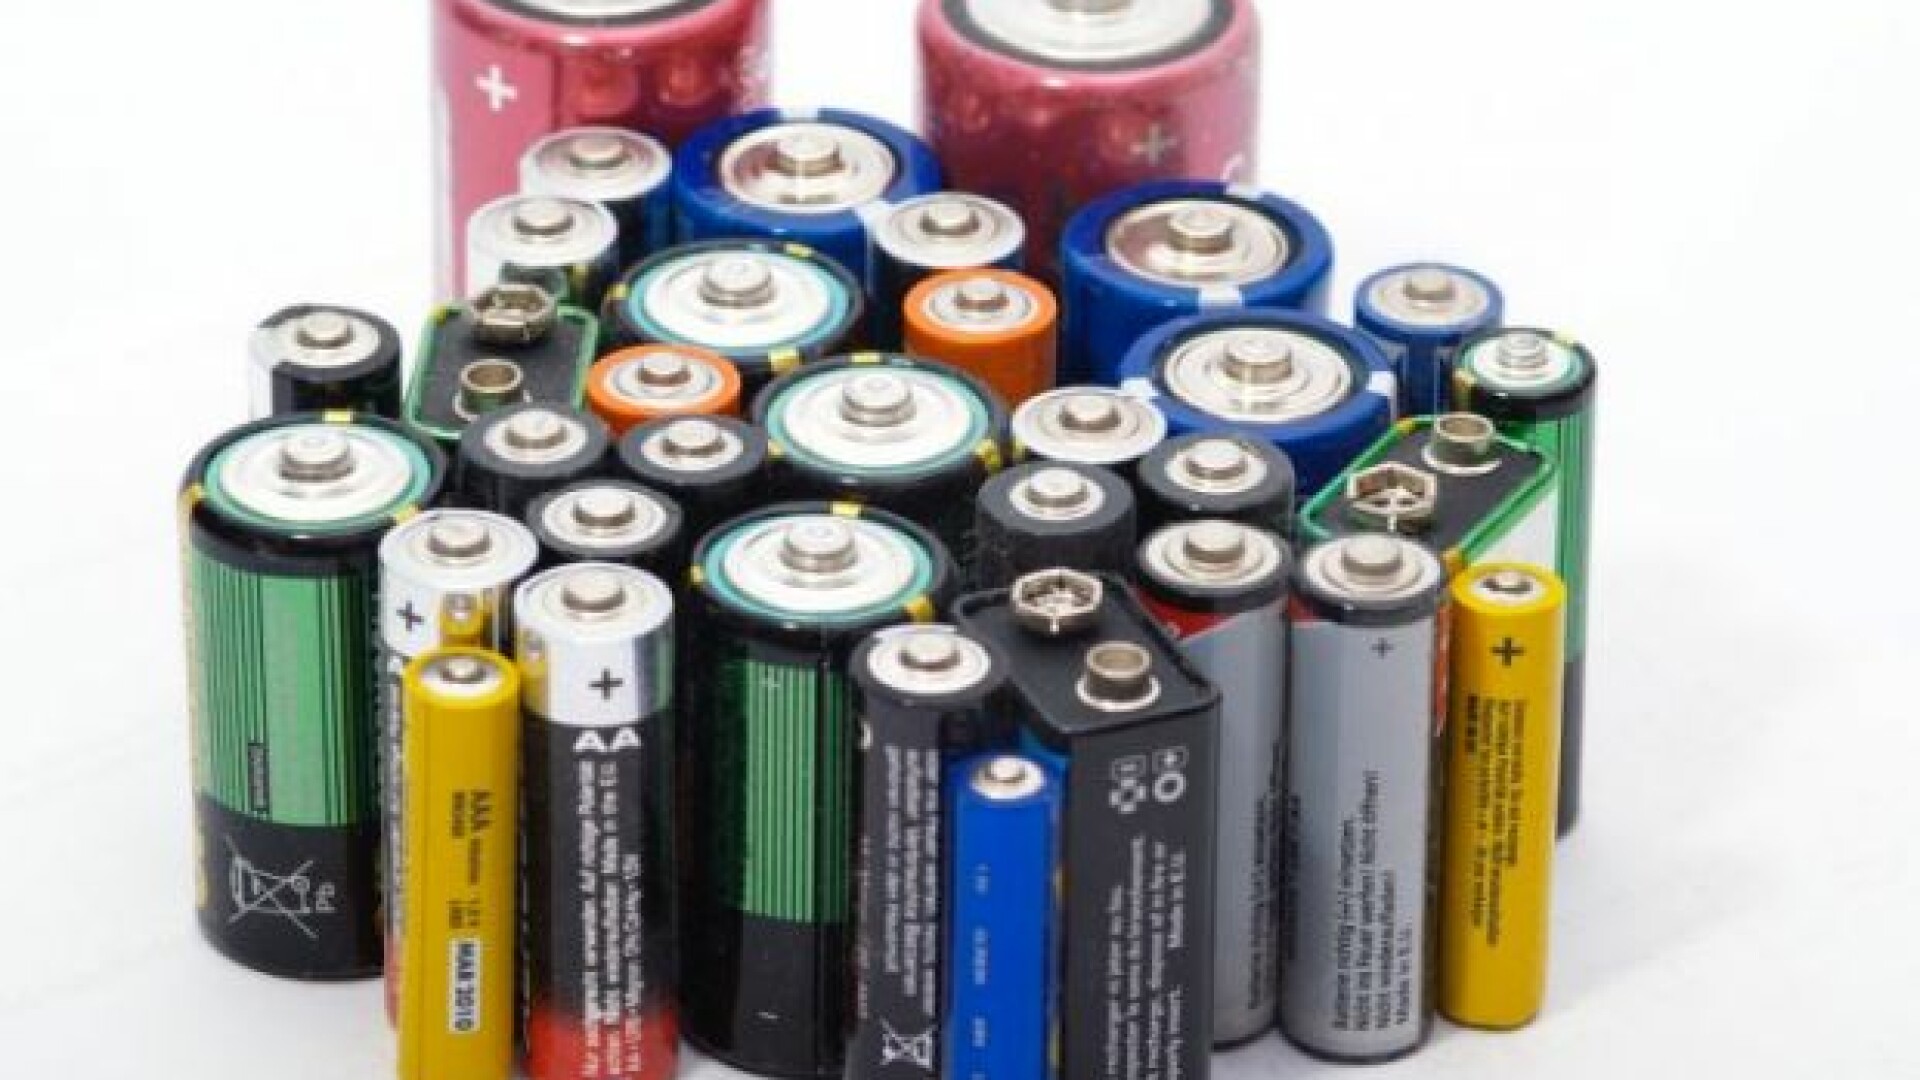 Baterii